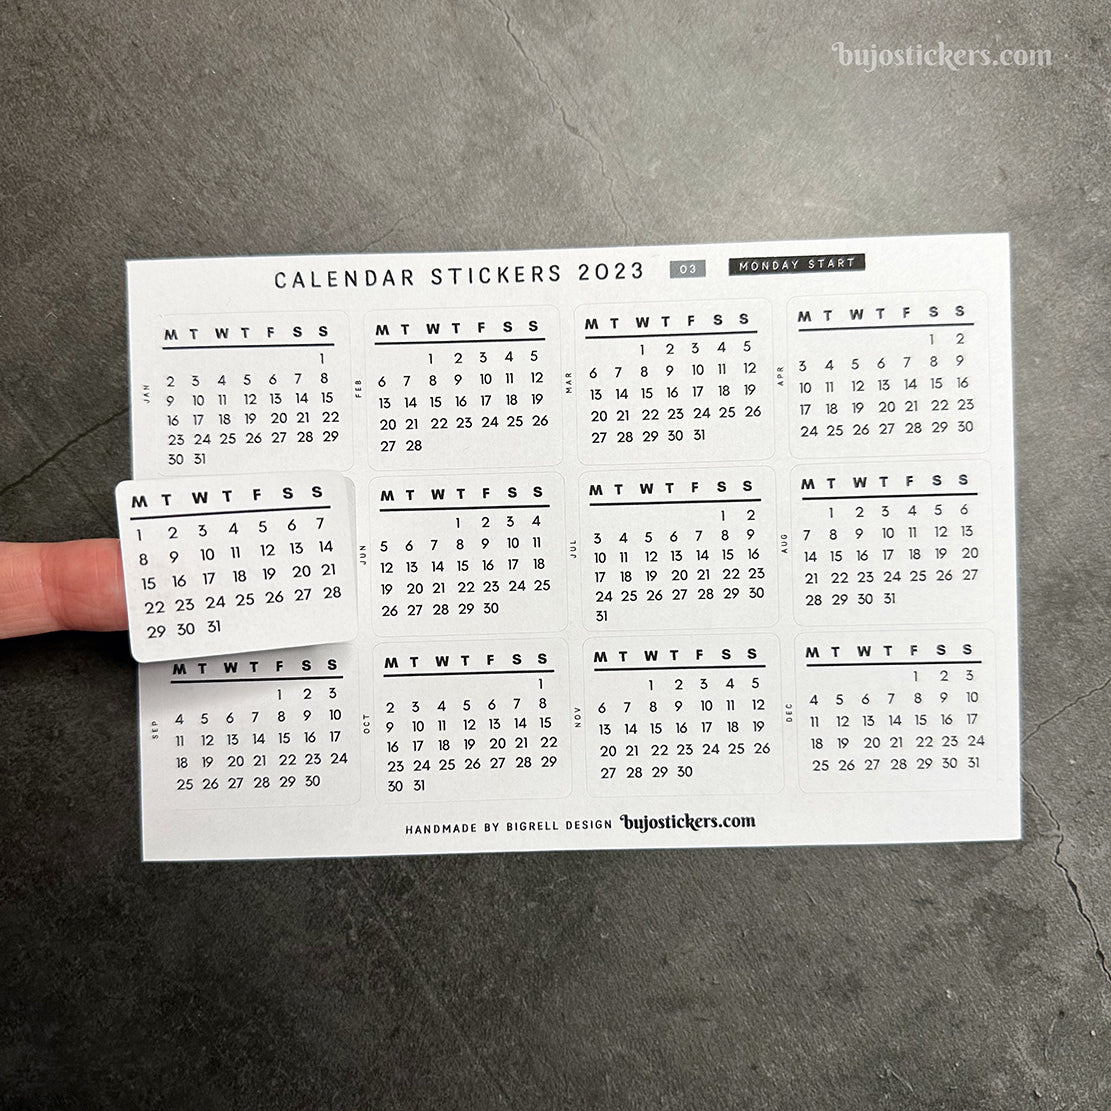 Calendar stickers 03 - Monday start - Select year